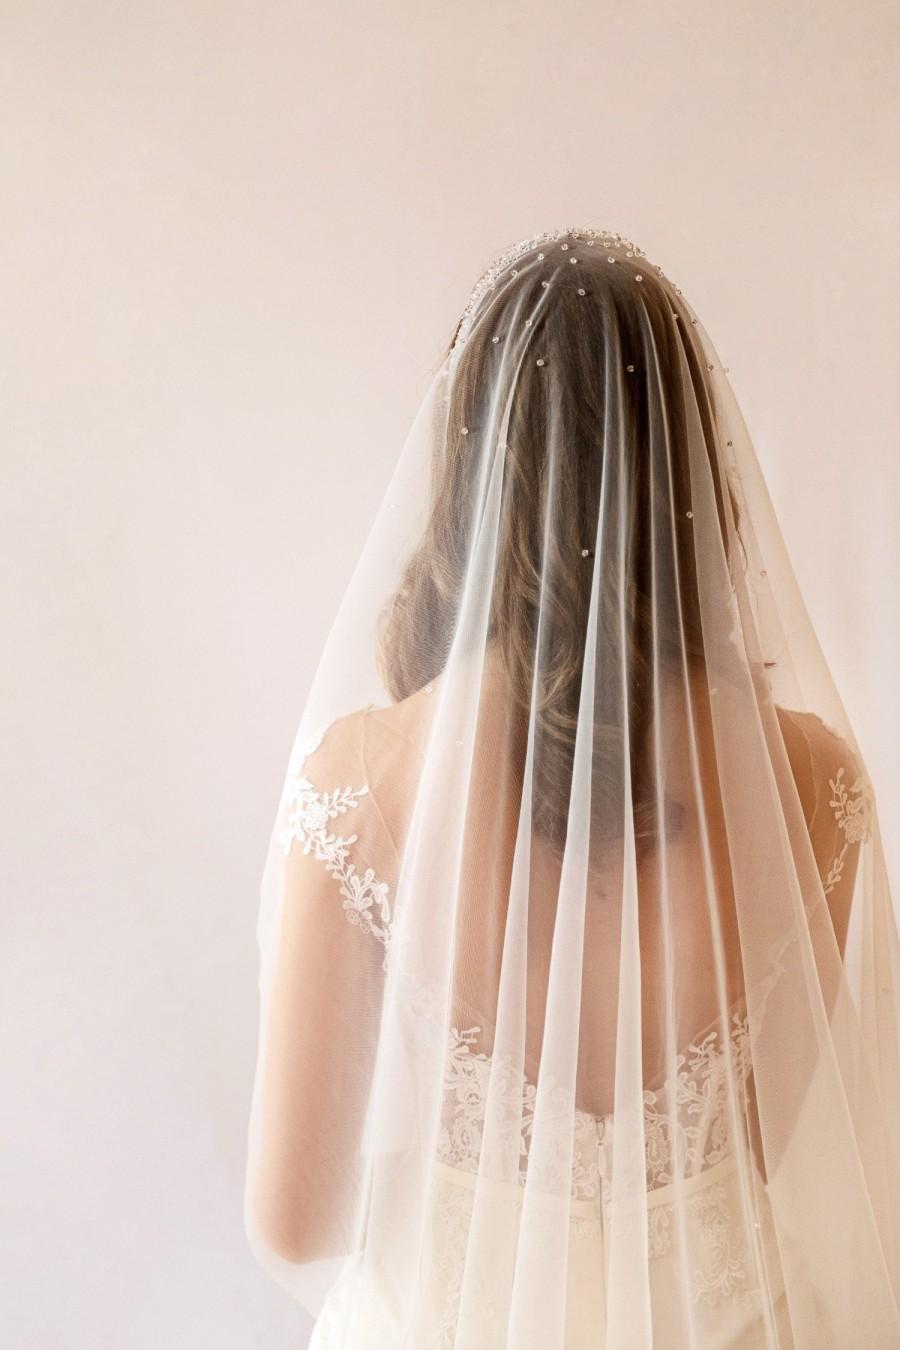 Mariage - Juliet cap wedding veil, vintage veil, crystal detailed veil - romantic wedding veil-Chapel length veil